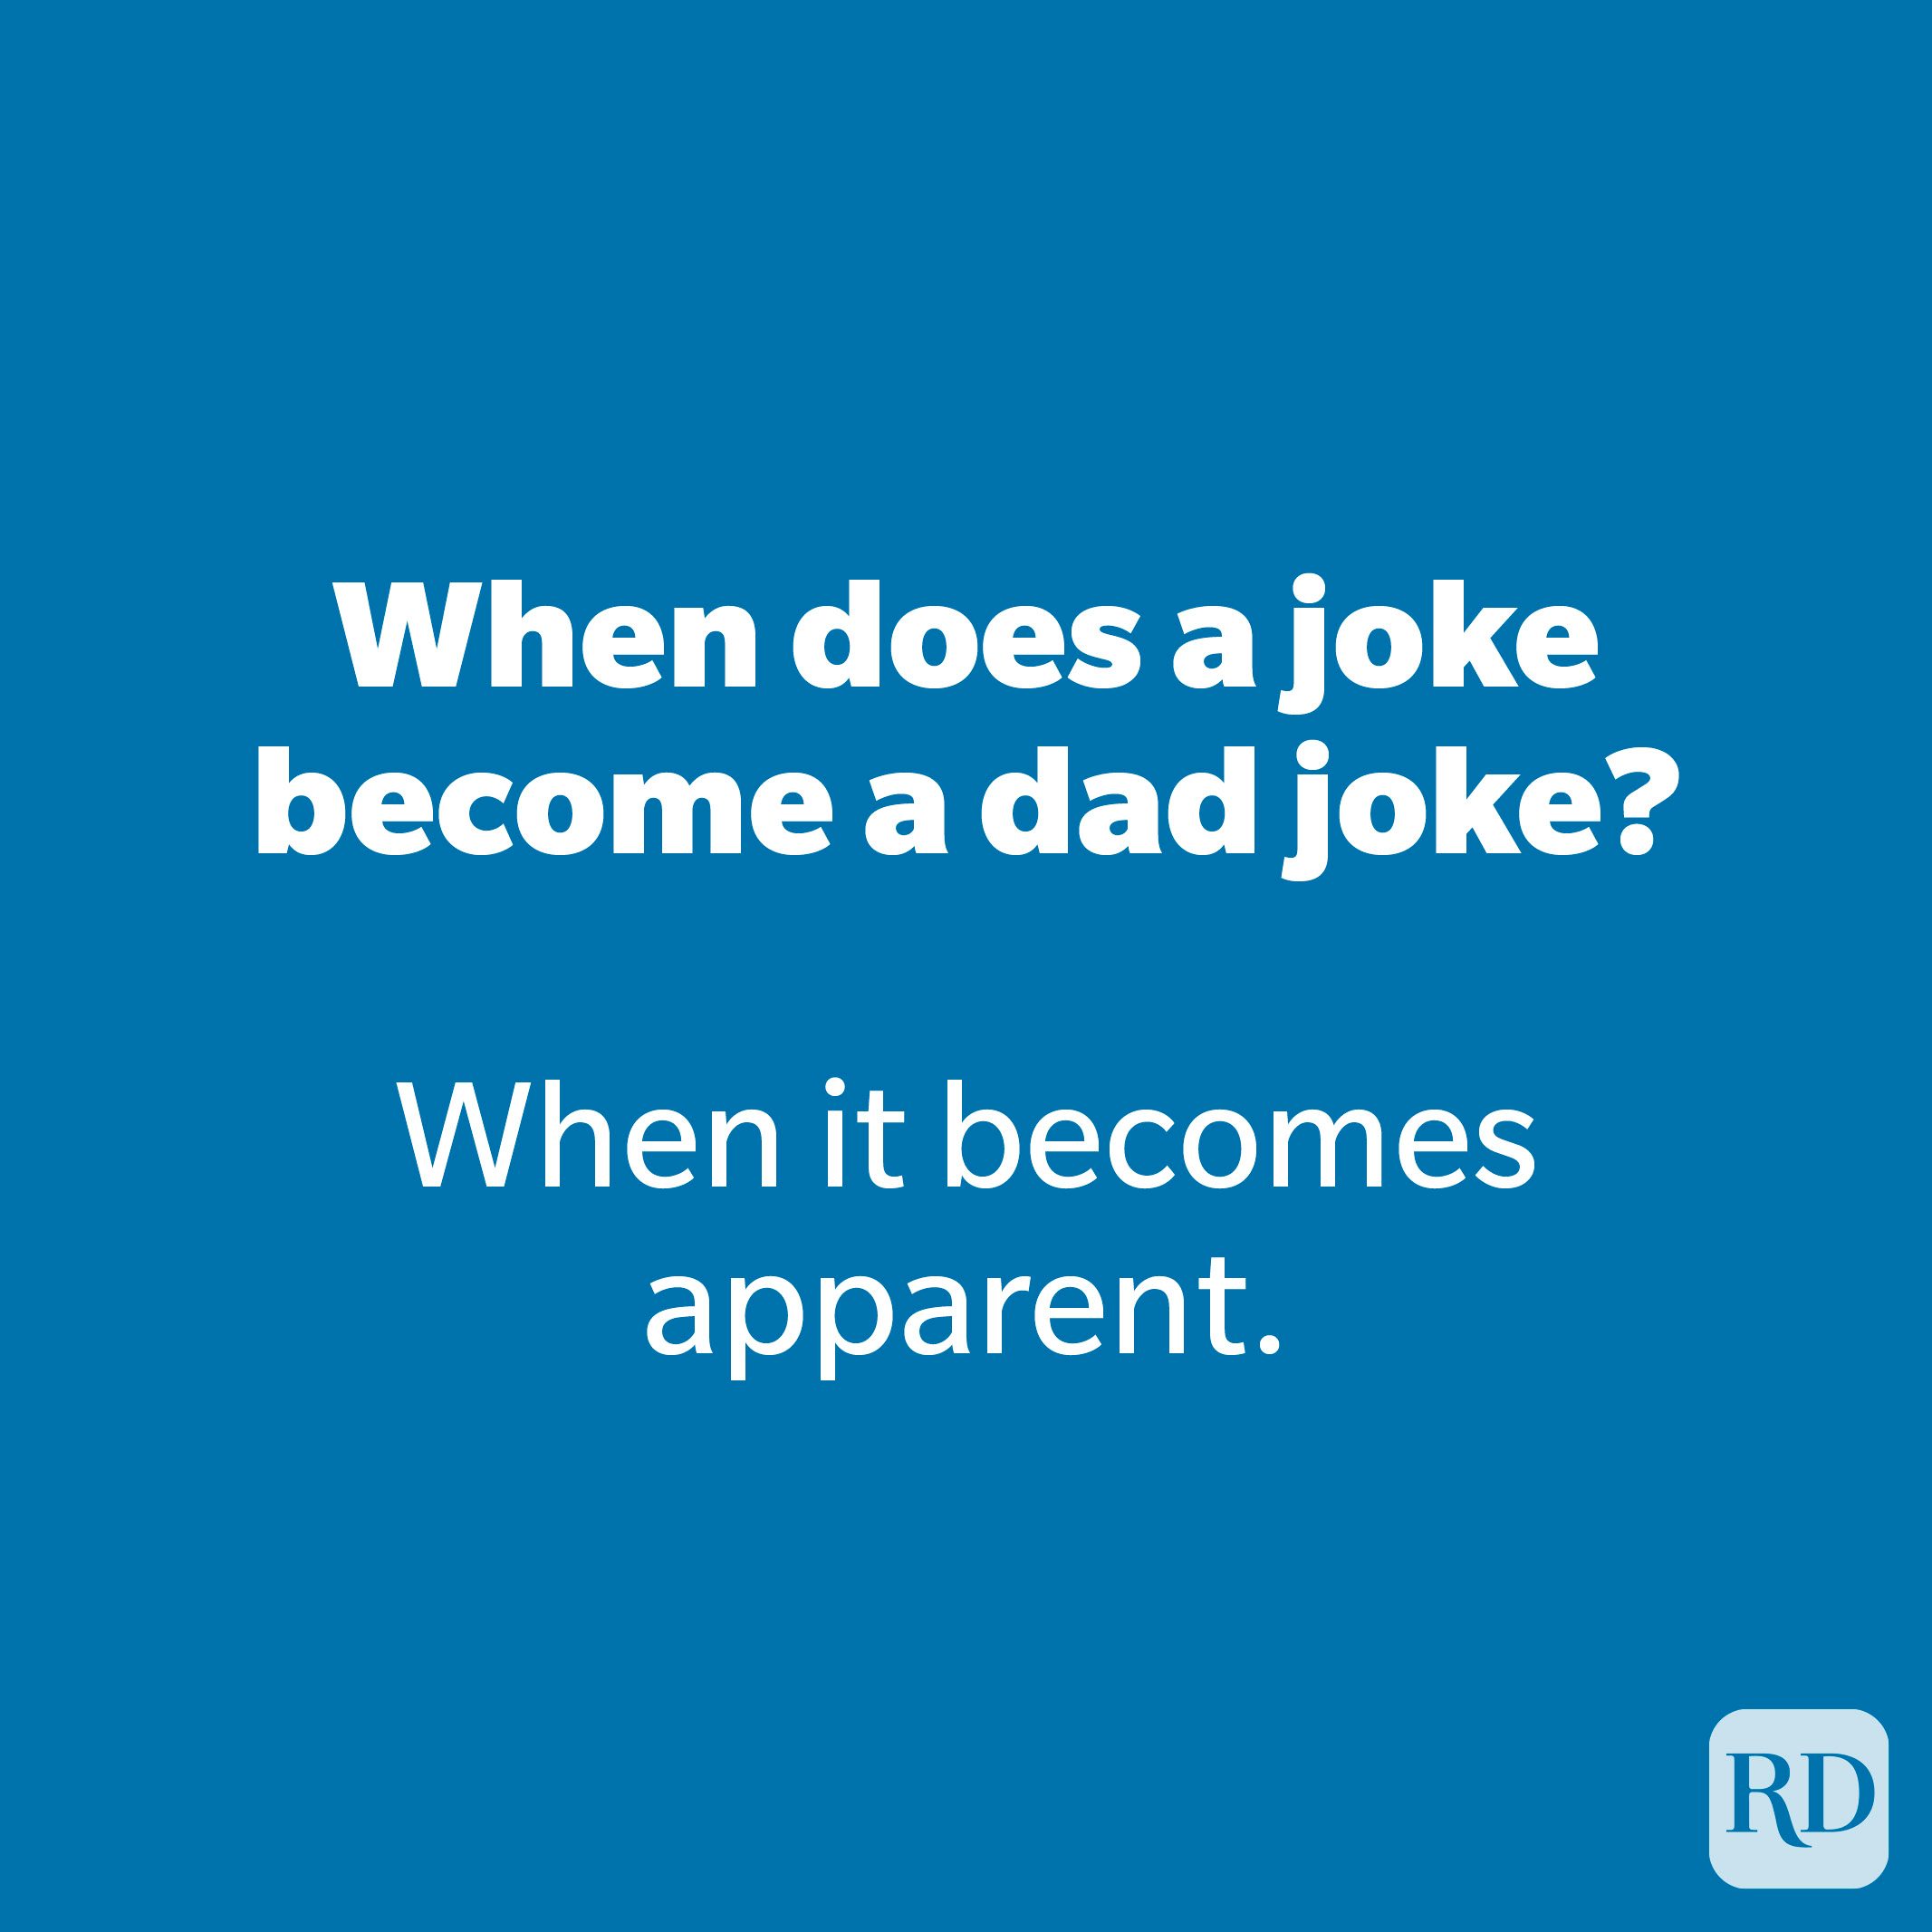 Phobia kolbe bjælke 175 Bad Jokes That You Can't Help But Laugh At | Reader's Digest